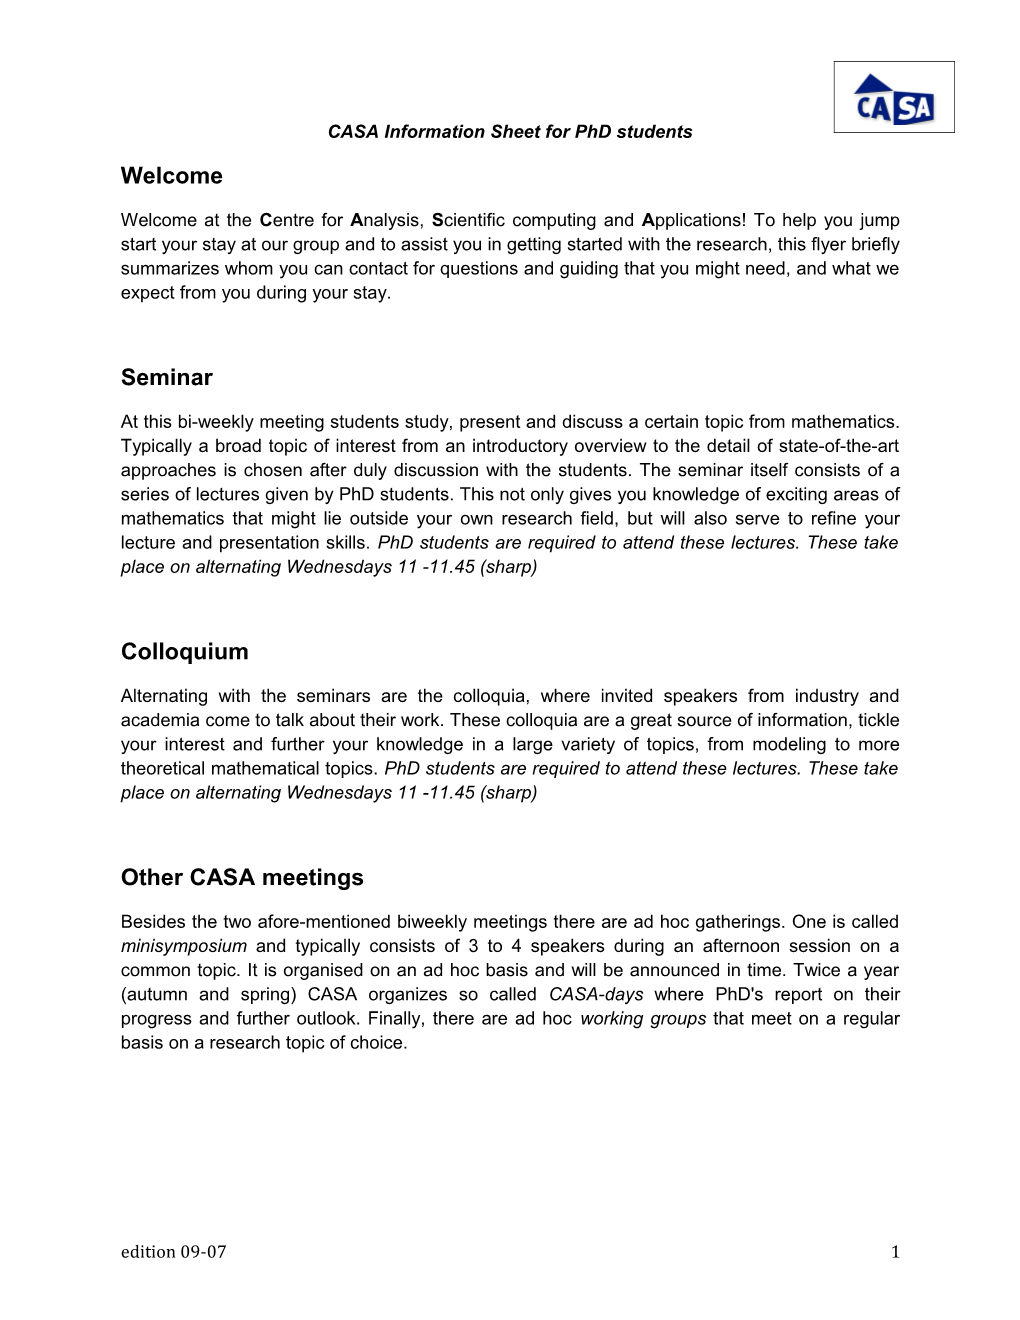 CASA Information Sheet for Phd Students